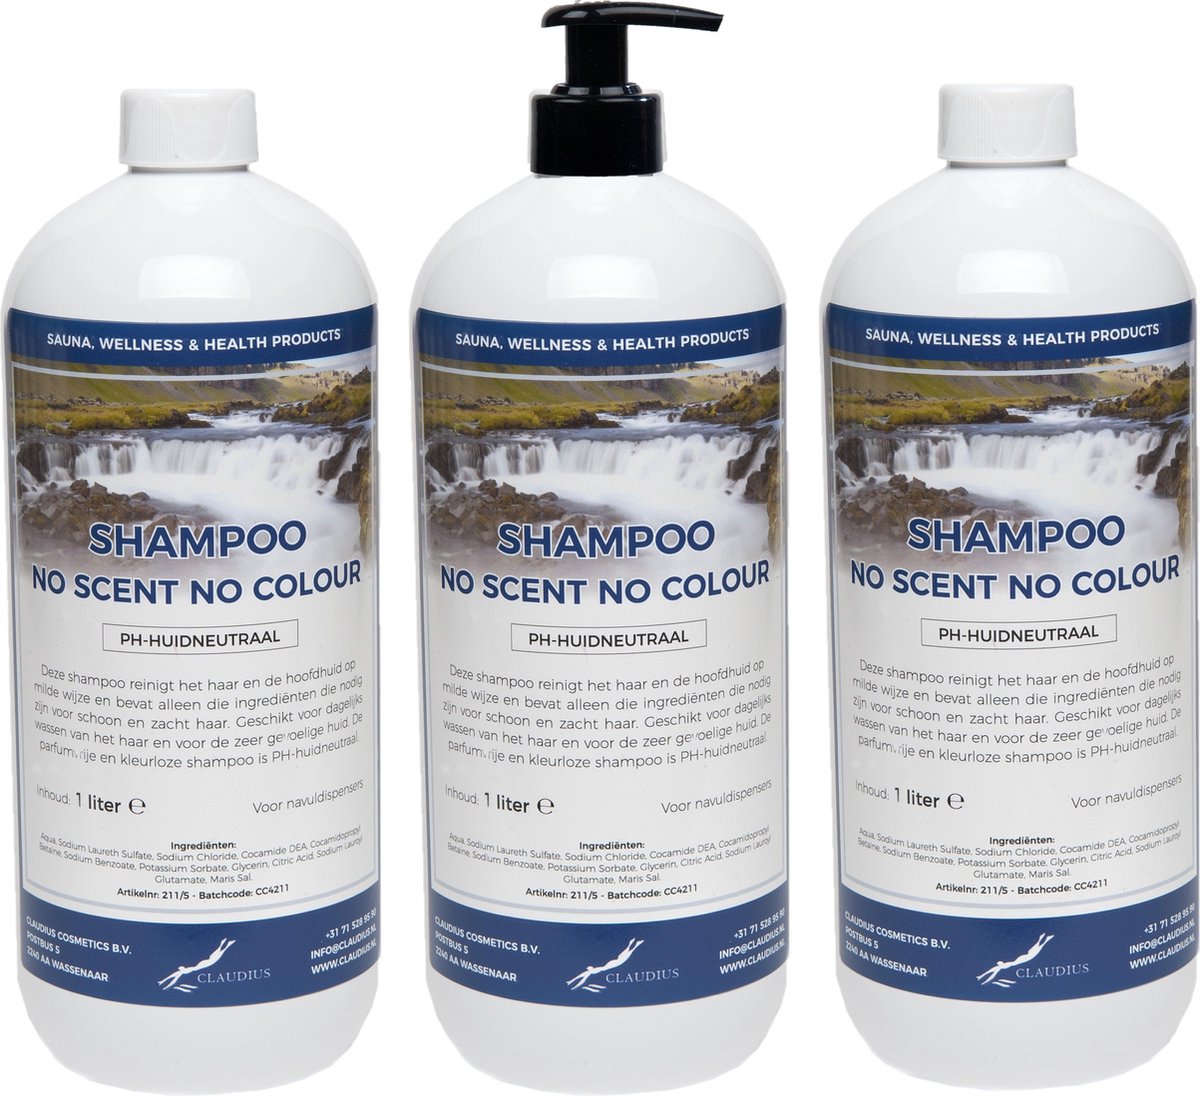 Shampoo No Scent No Colour - 1 Liter - set van 3 stuks - met gratis pomp